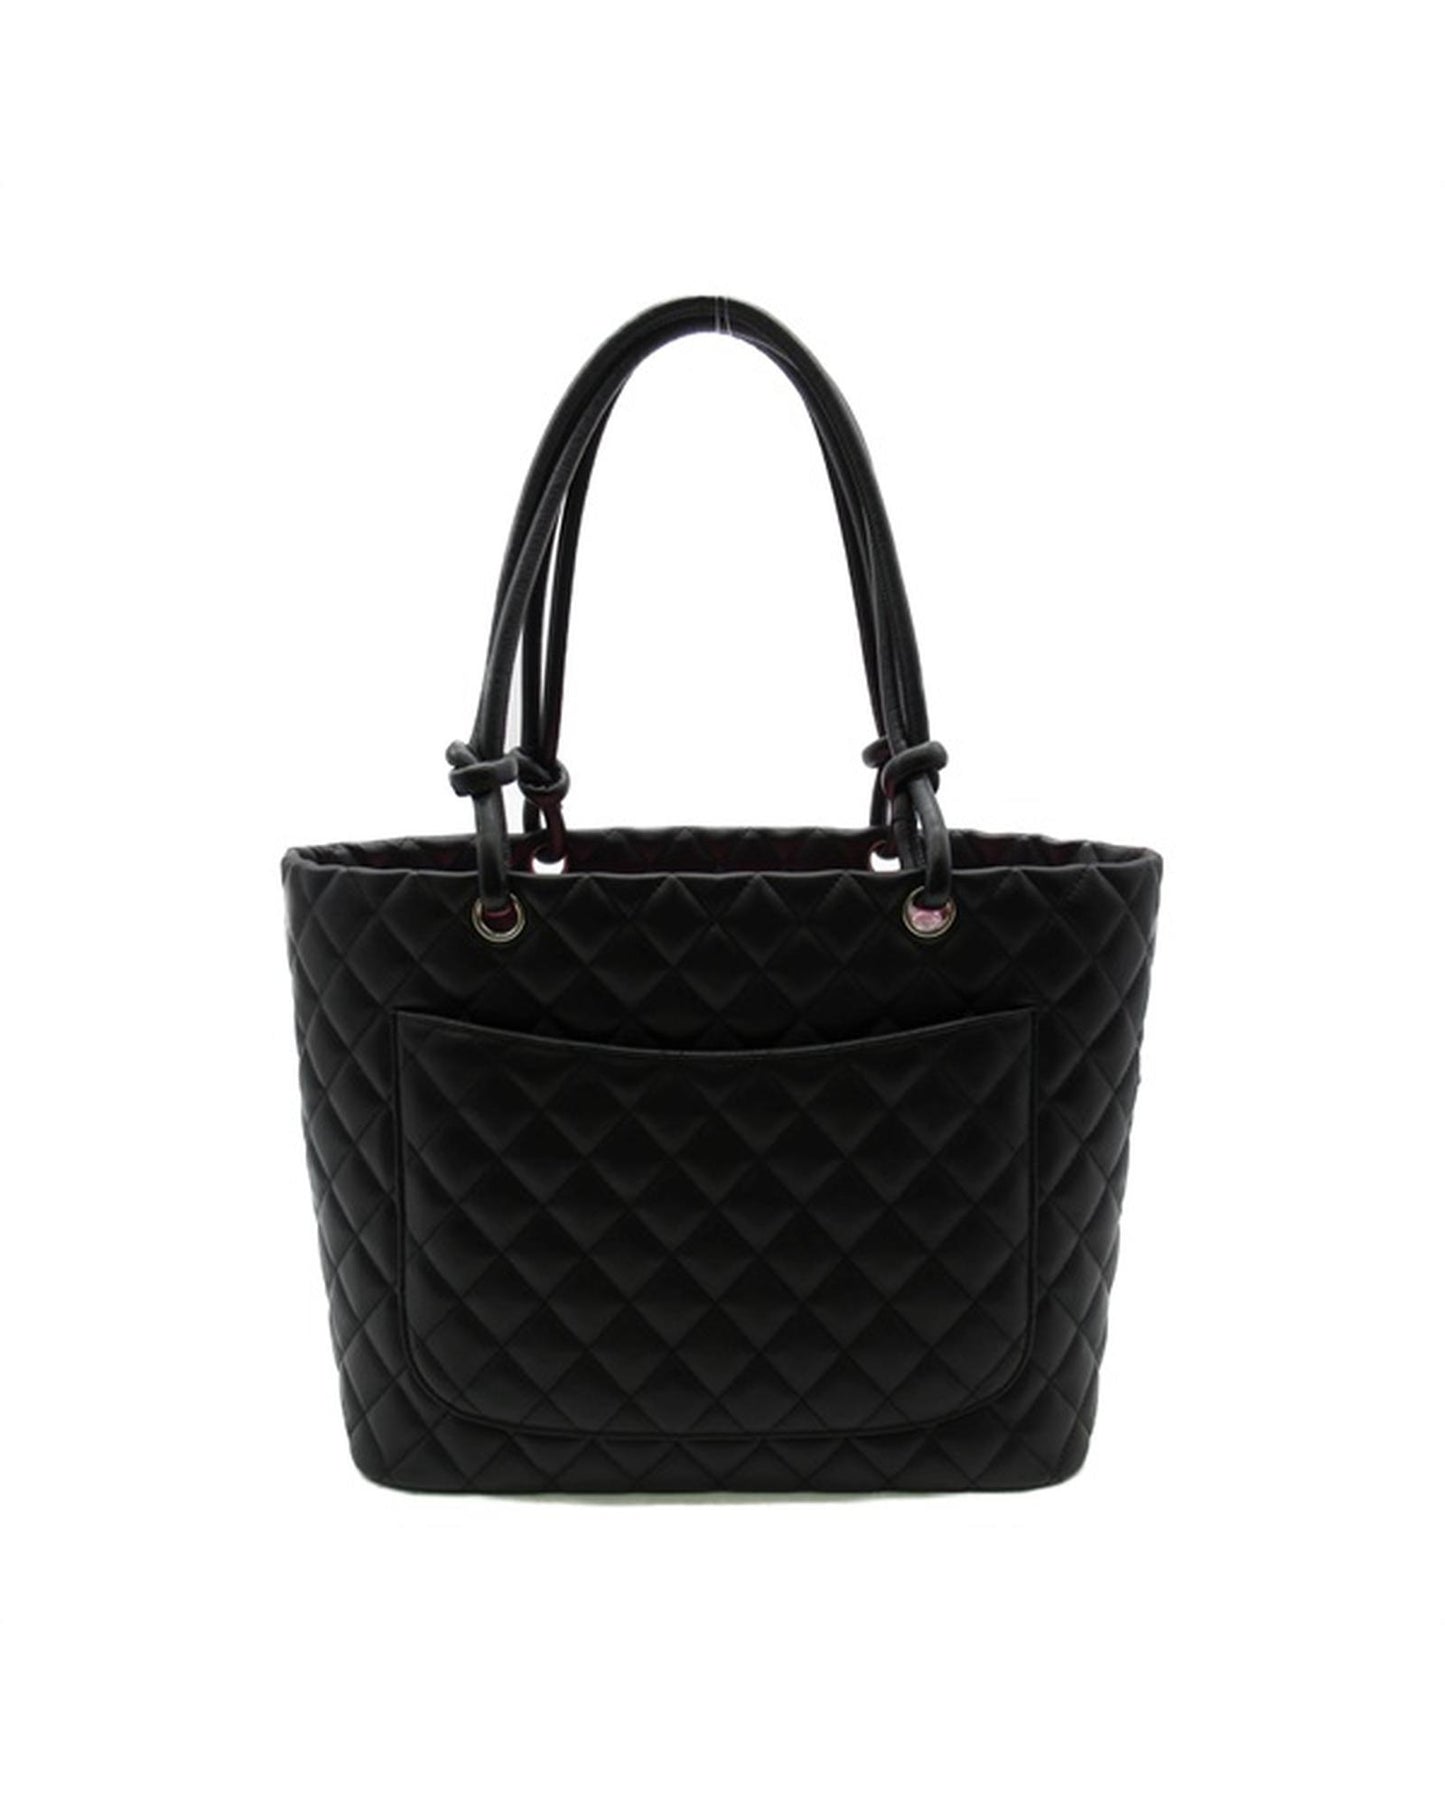 Chanel Women's Black CC Tote Bag in Black